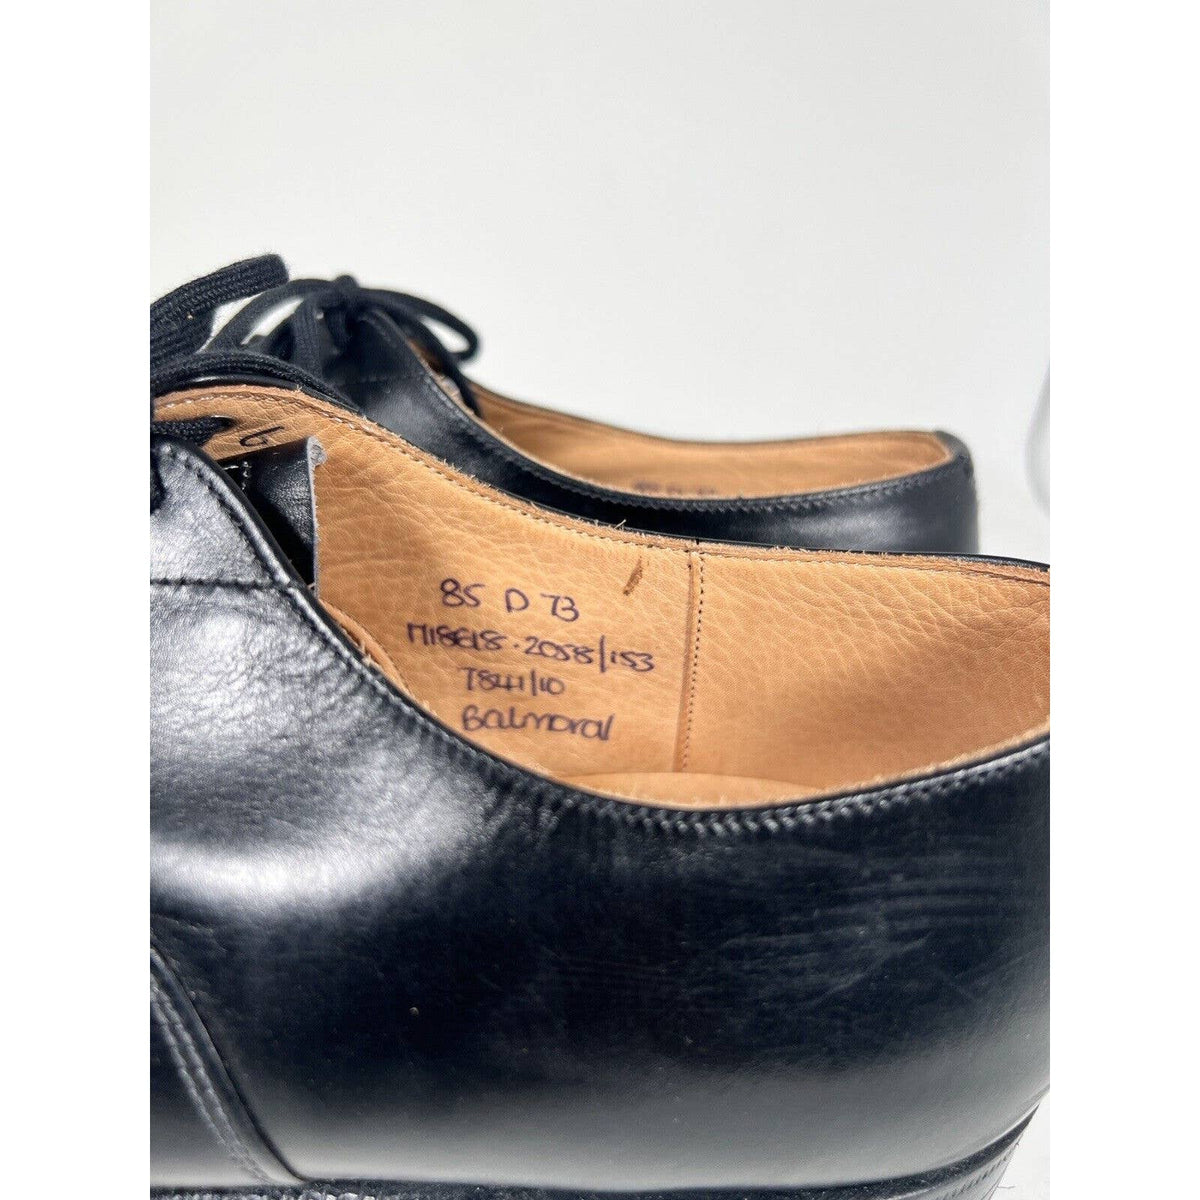 Church’s Black Lace-Up Oxford Leather Mens Shoes Sz.9.5 D